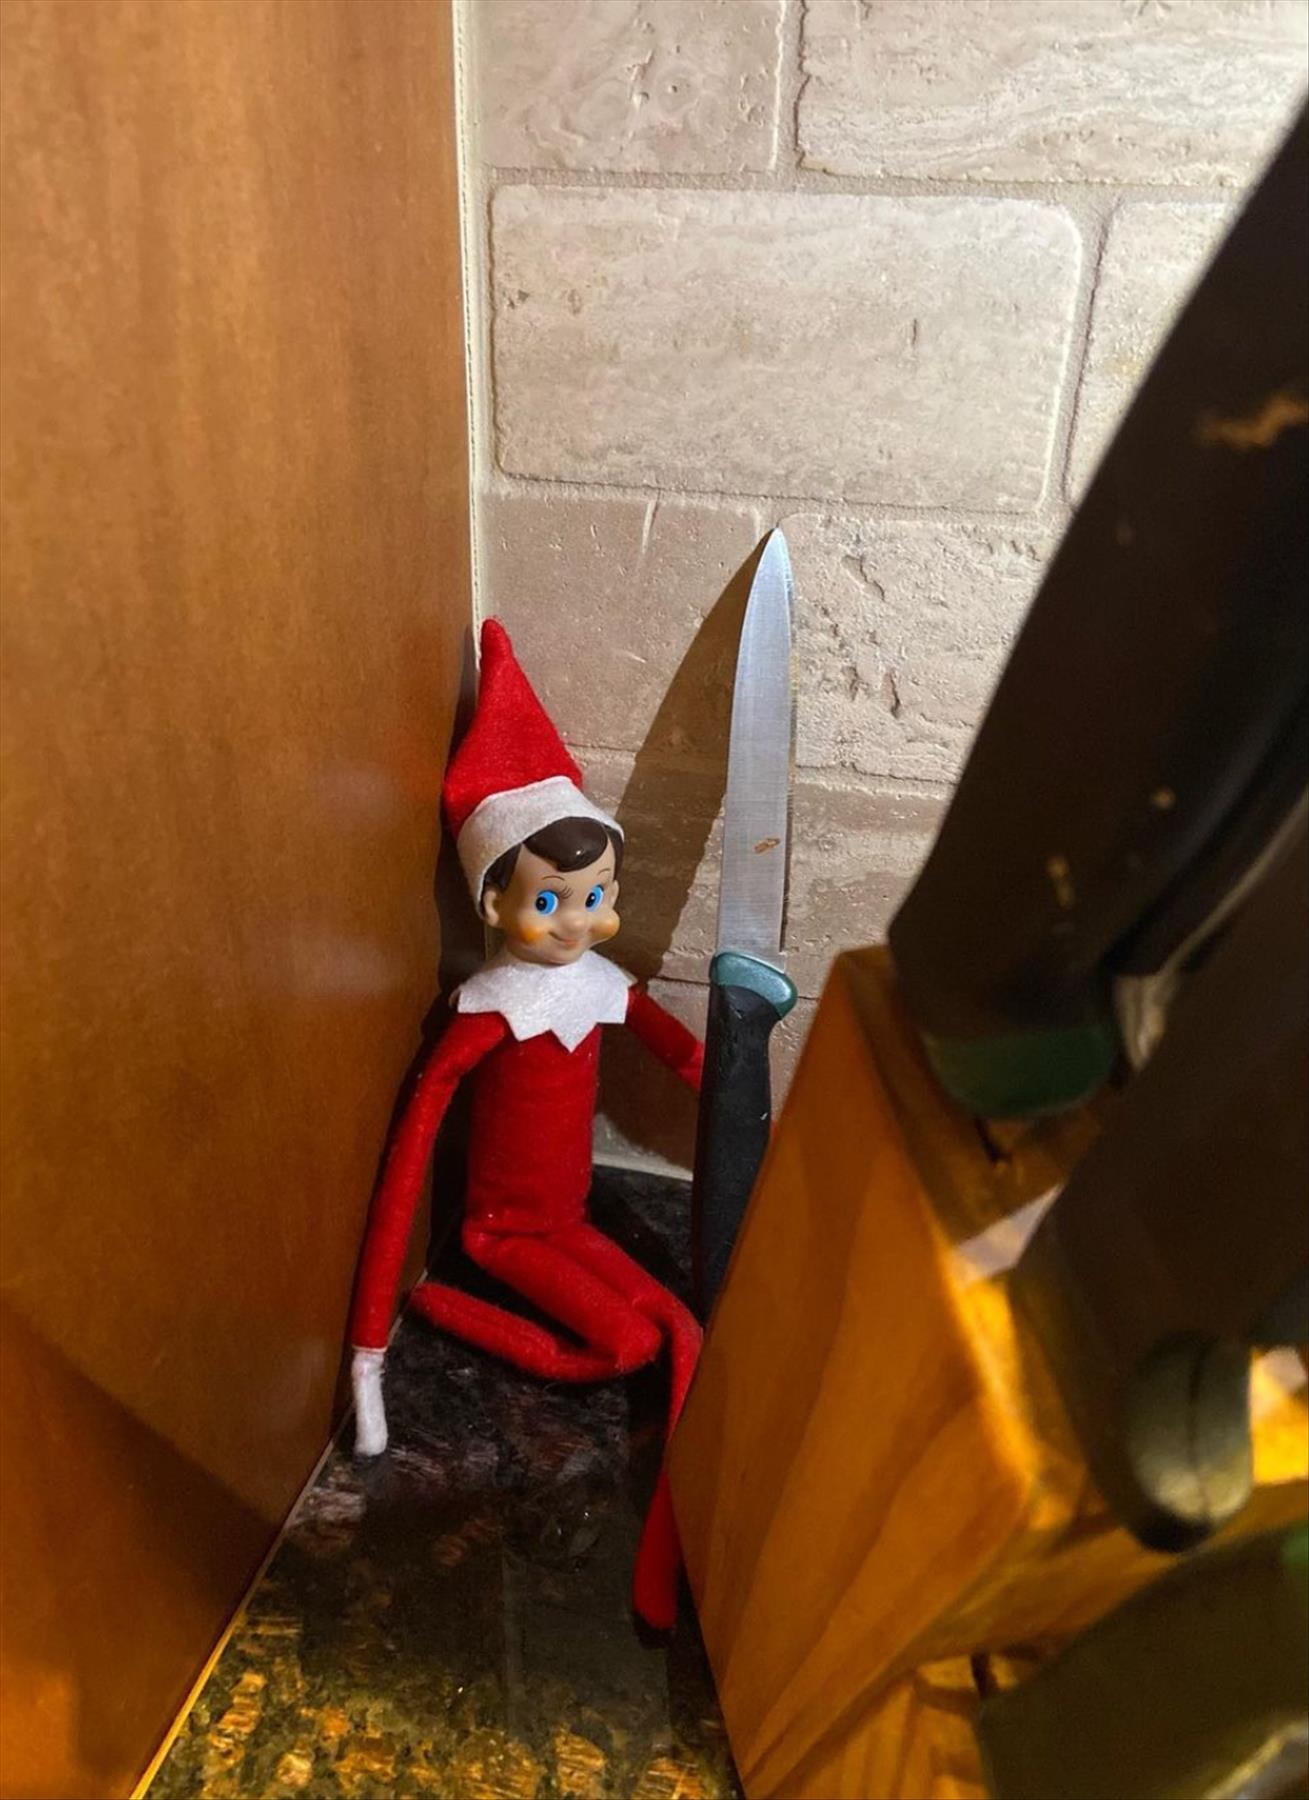 Naughty Elf on the Shelf Ideas for Christmas 2021